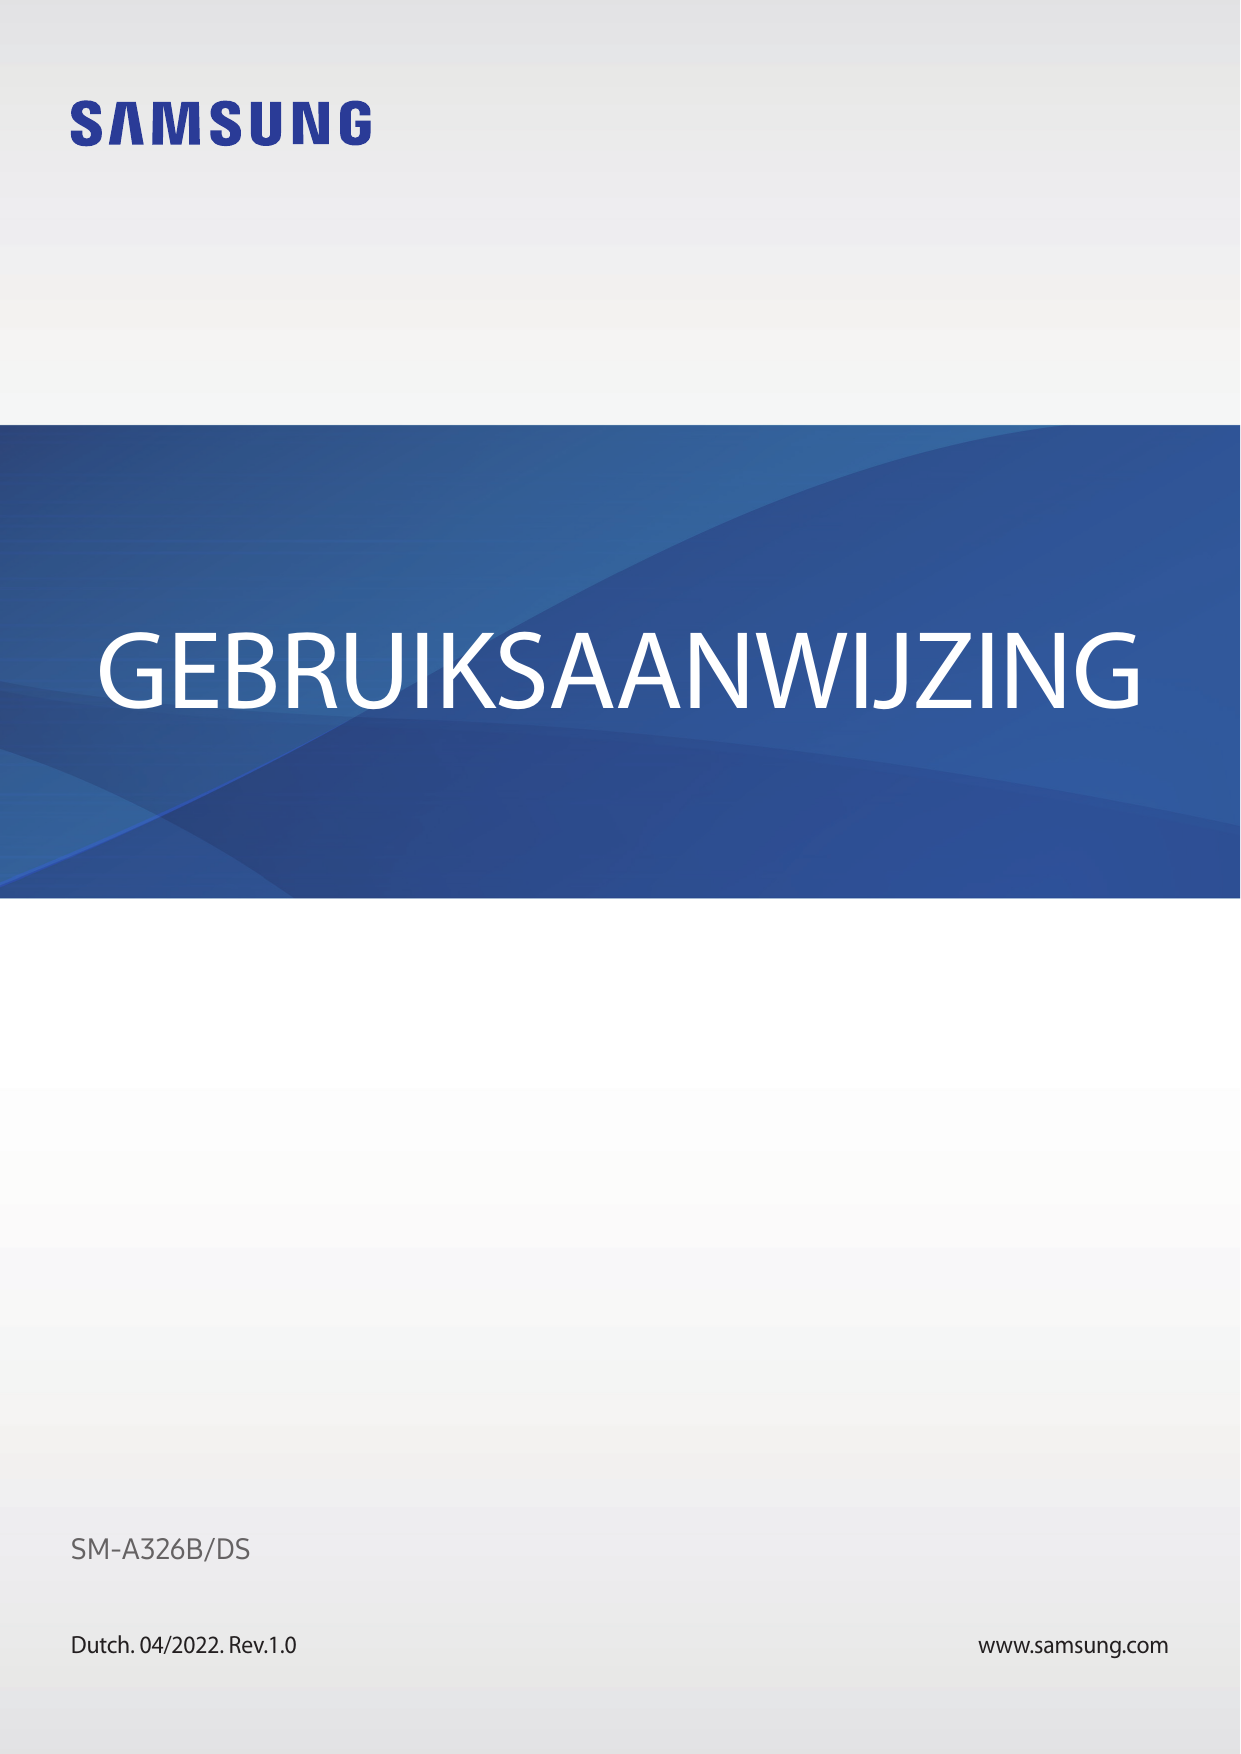 GEBRUIKSAANWIJZINGSM-A326B/DSDutch. 04/2022. Rev.1.0www.samsung.com